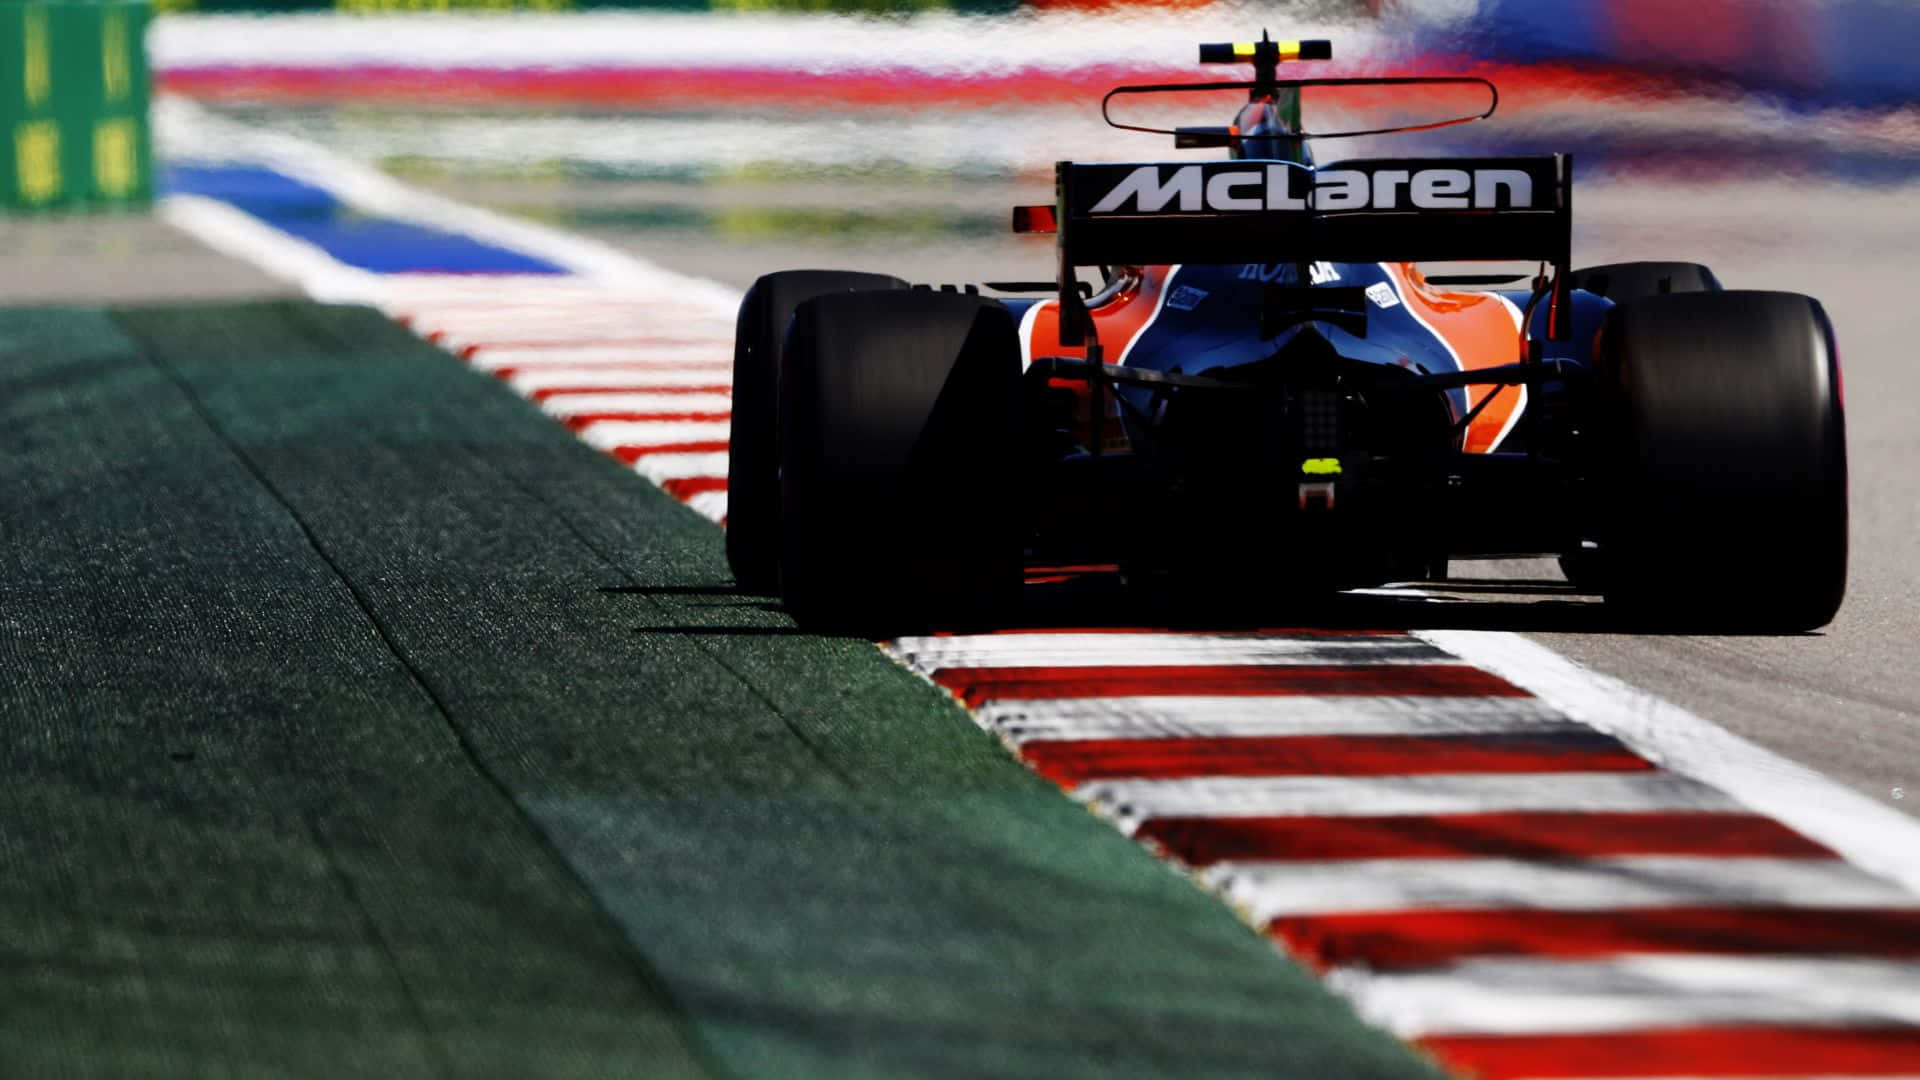 Formel 1 racerbil rammer sporet Wallpaper